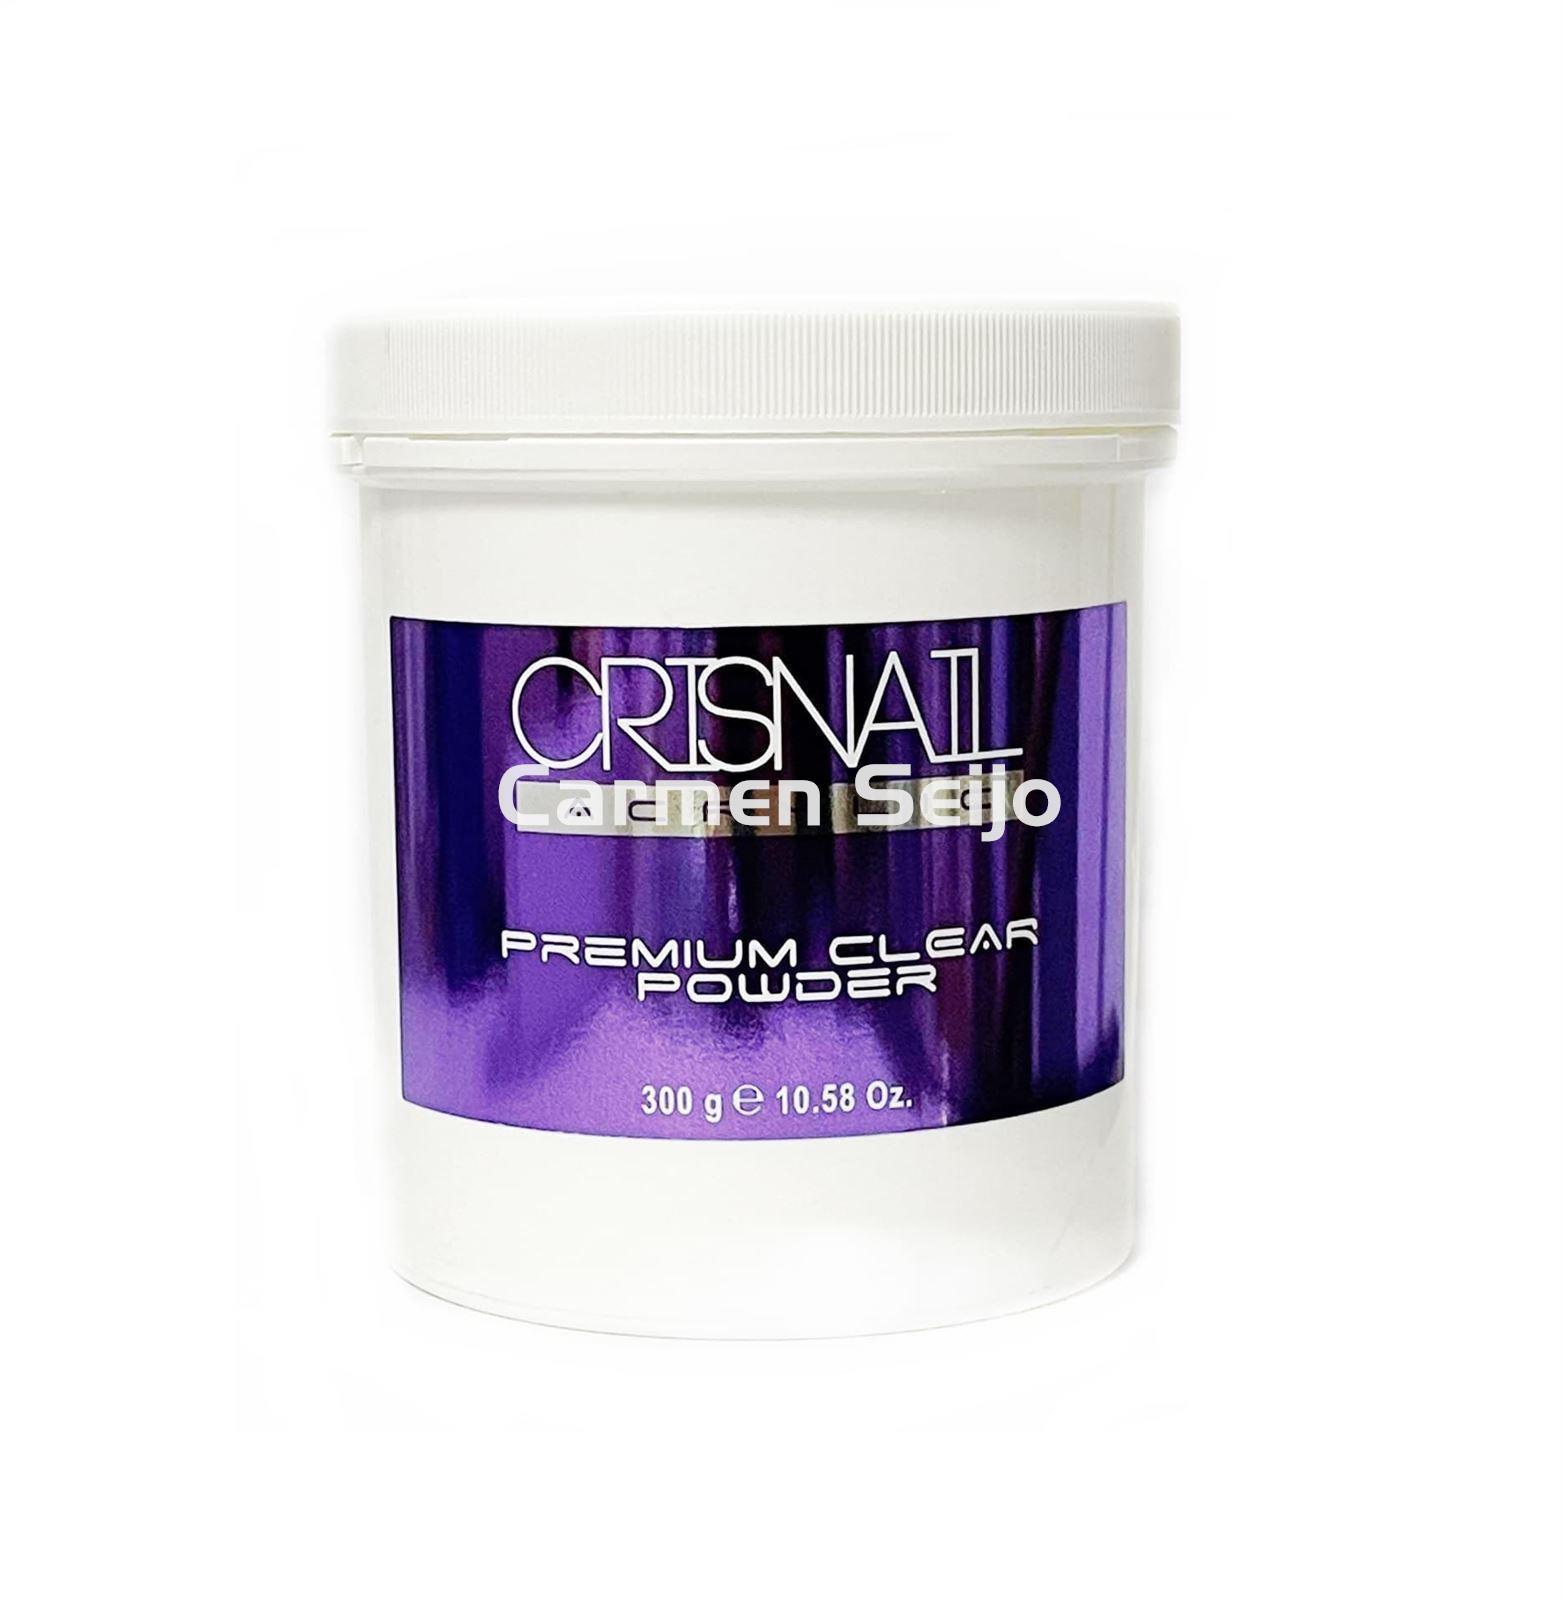 Crisnail Acrílico Premium Clear Podwer Acrylic - Imagen 1